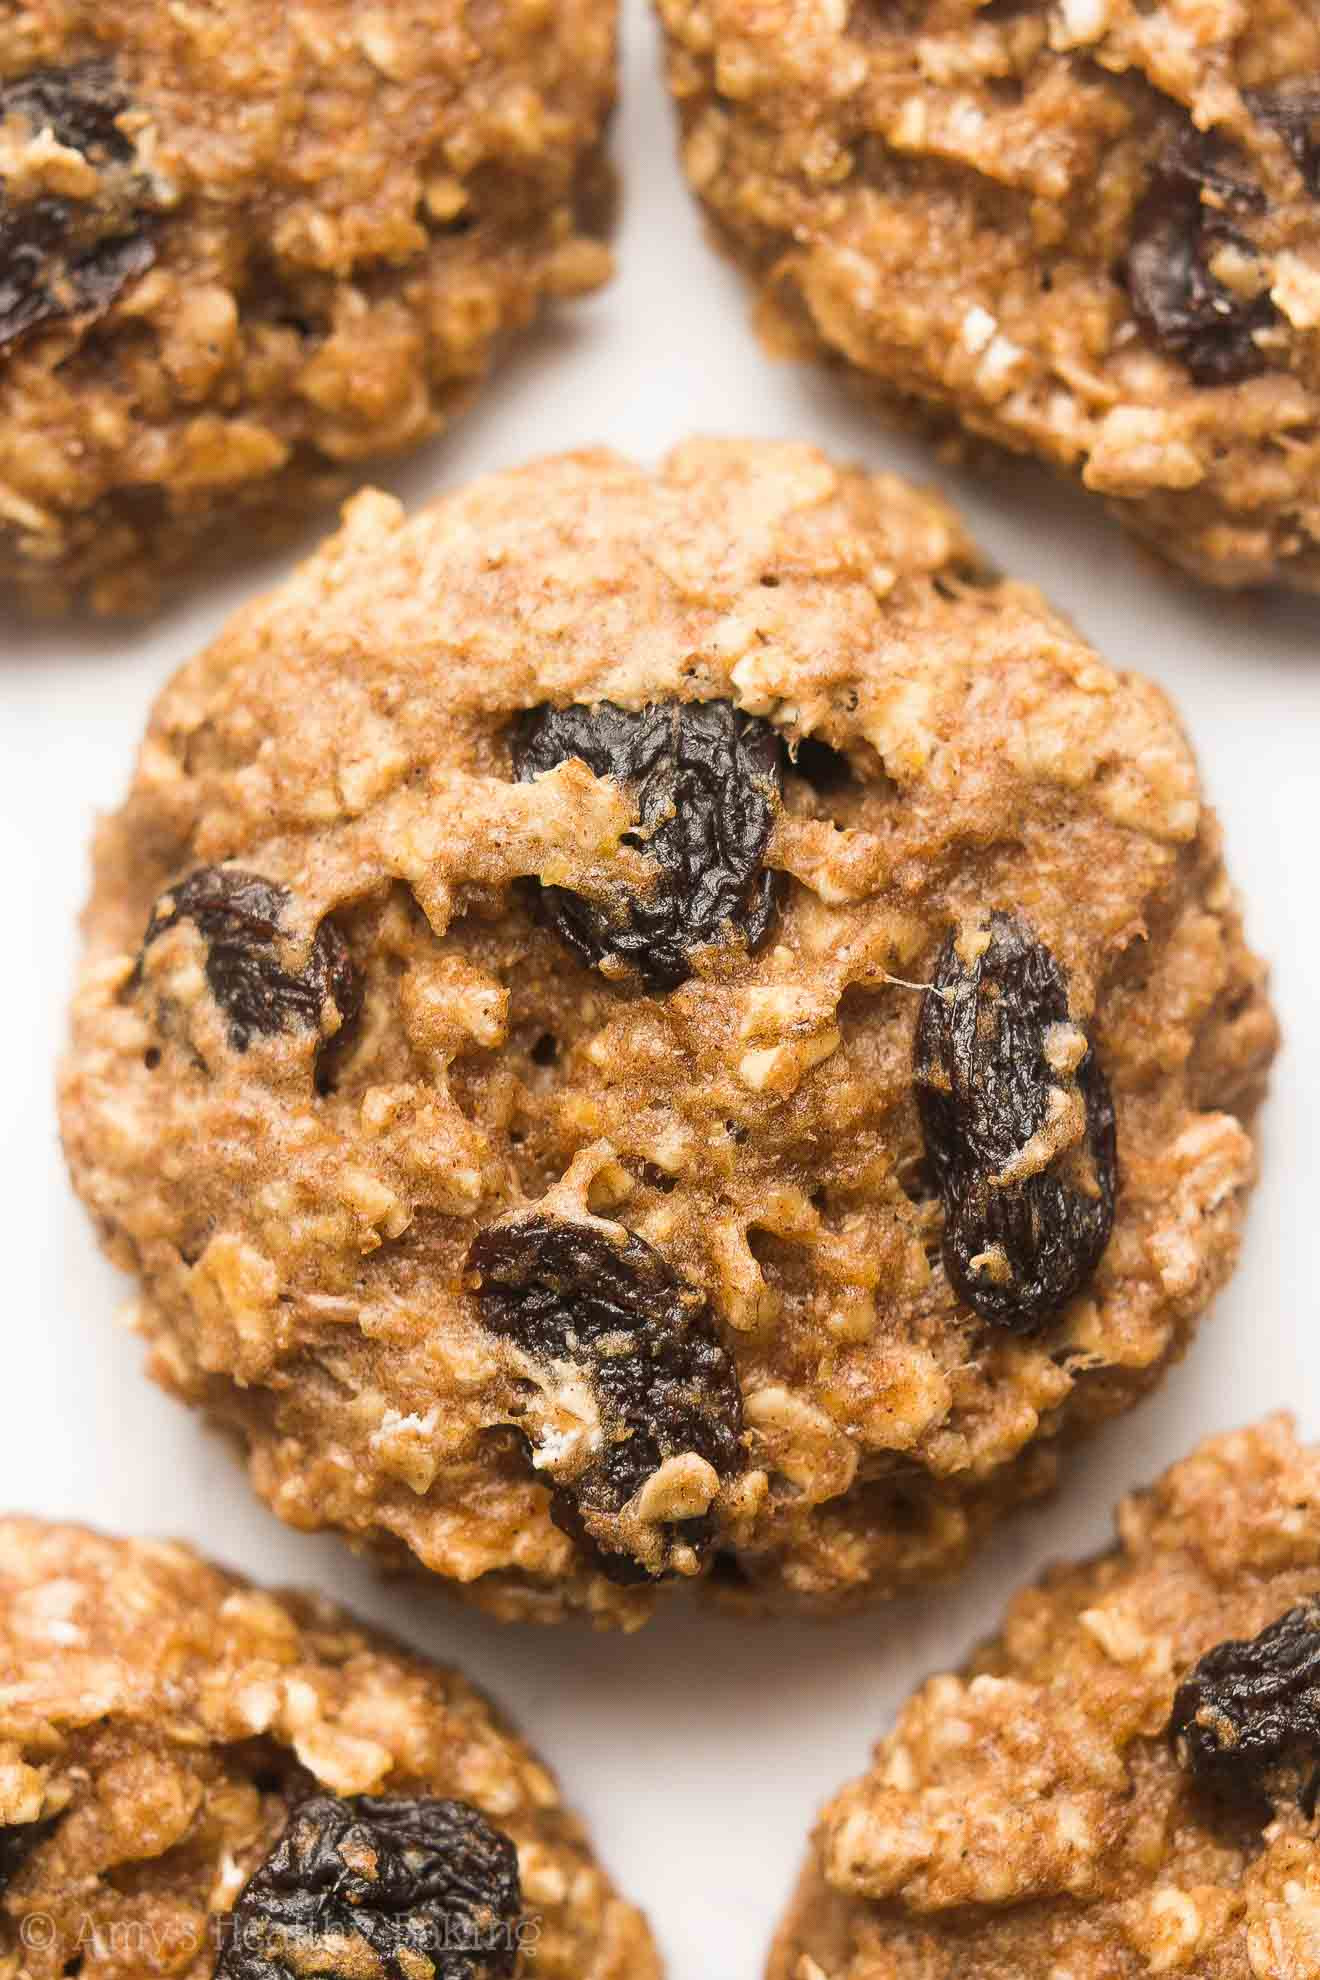 Heart Healthy Oatmeal Recipes
 heart healthy oatmeal raisin cookies